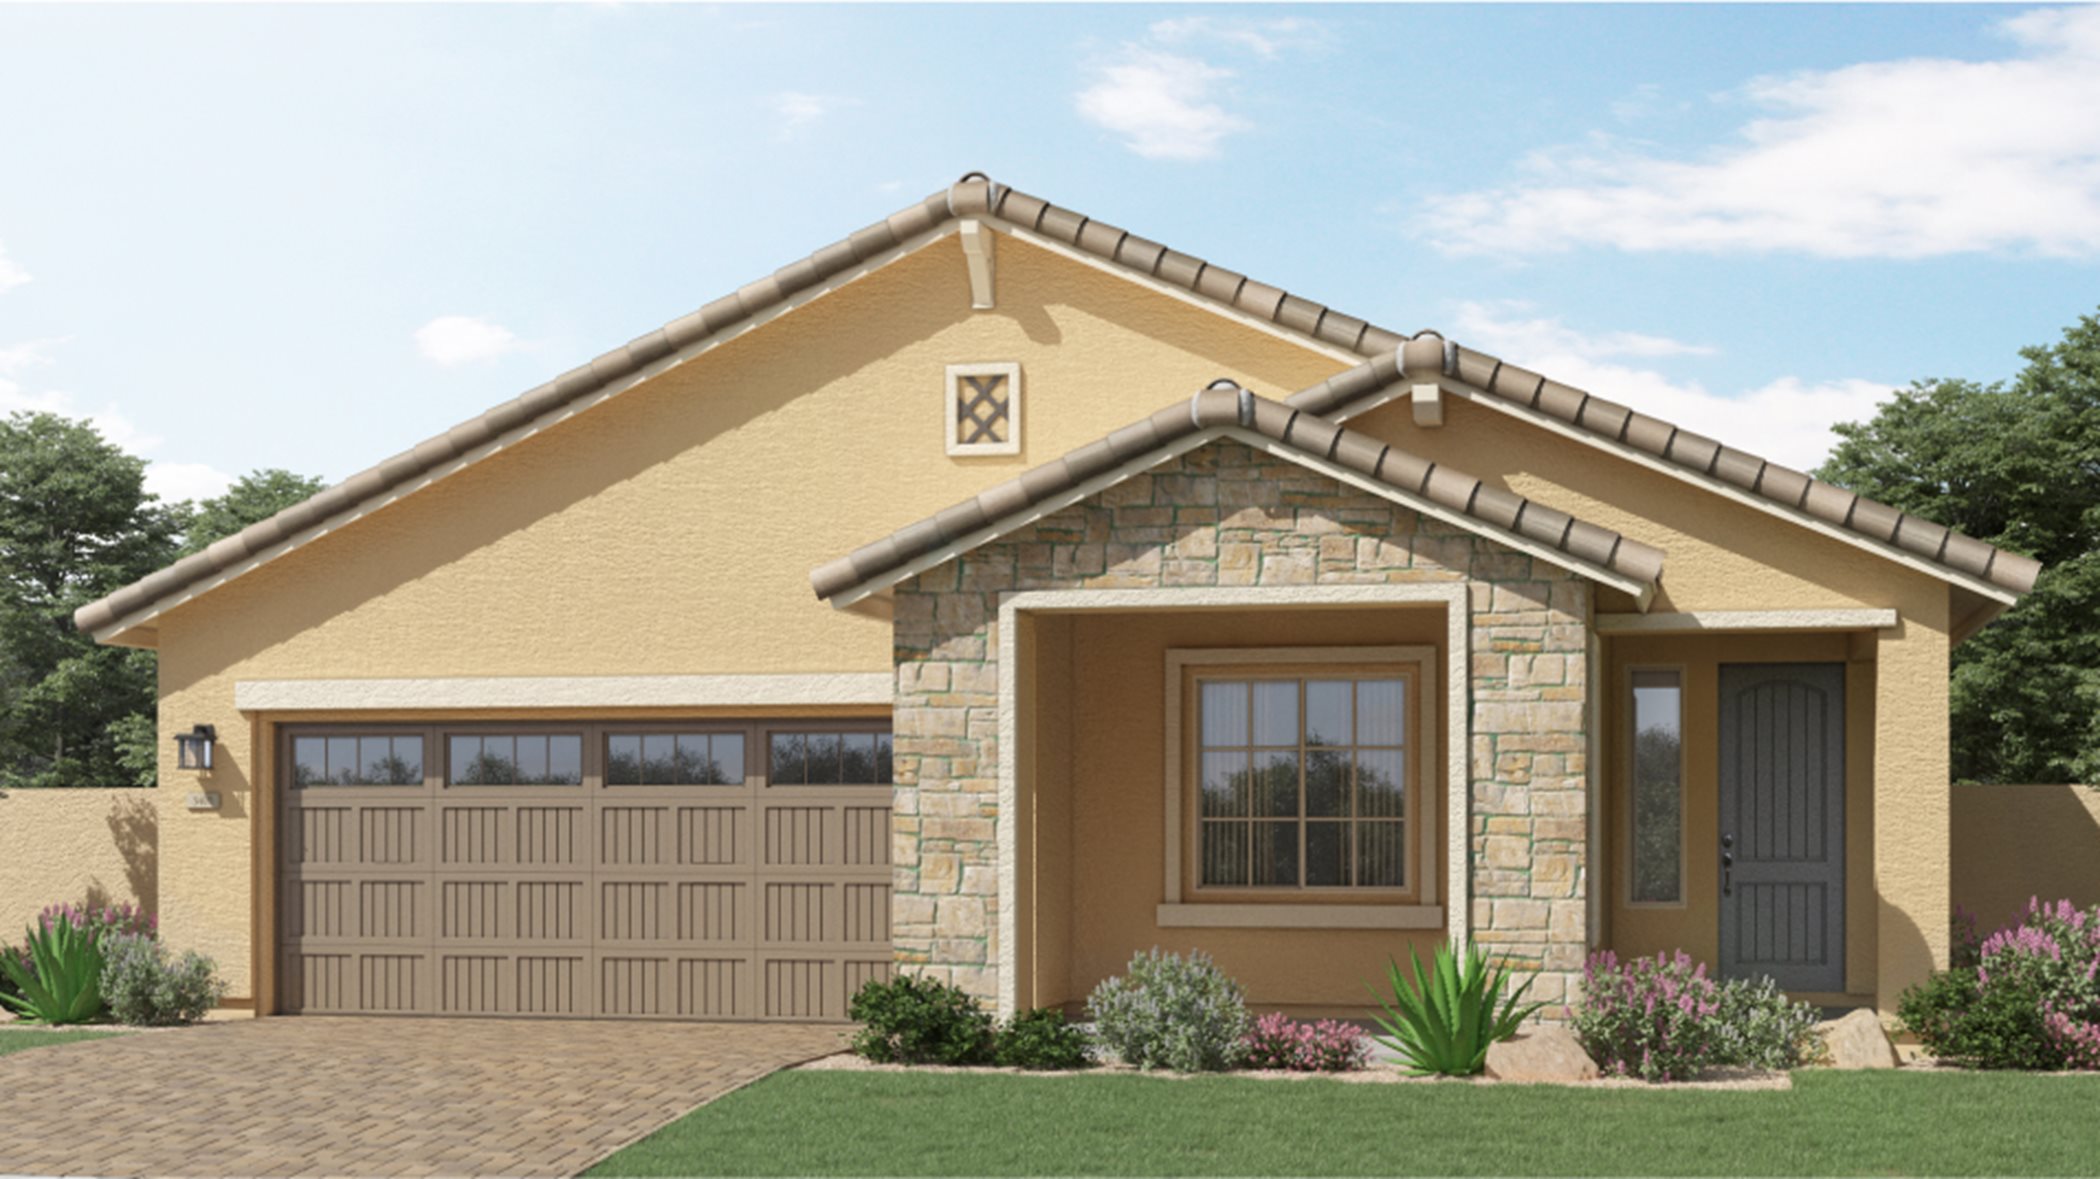 Adobe Ranch home rendering